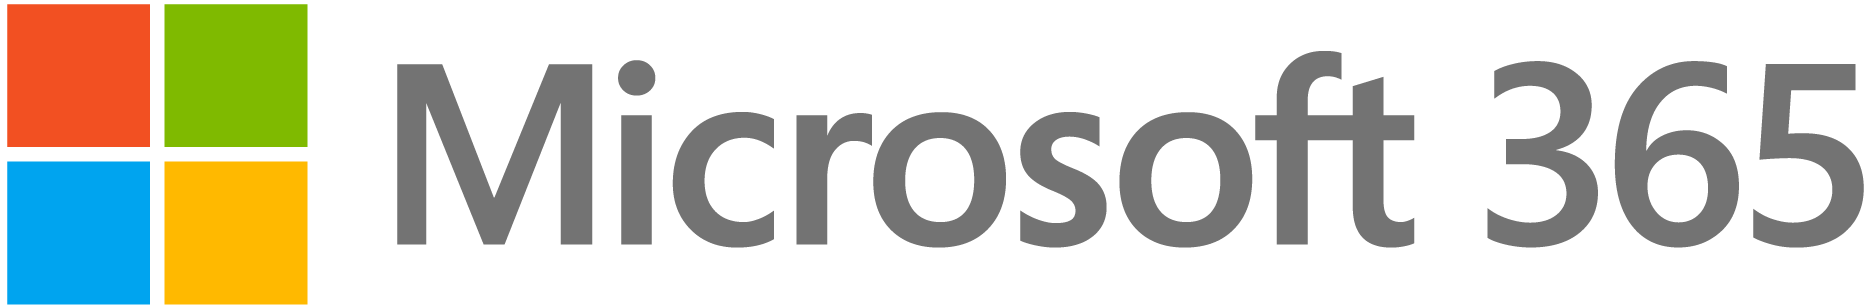 Microsoft 365 logo - case history Salvatore Robuschi